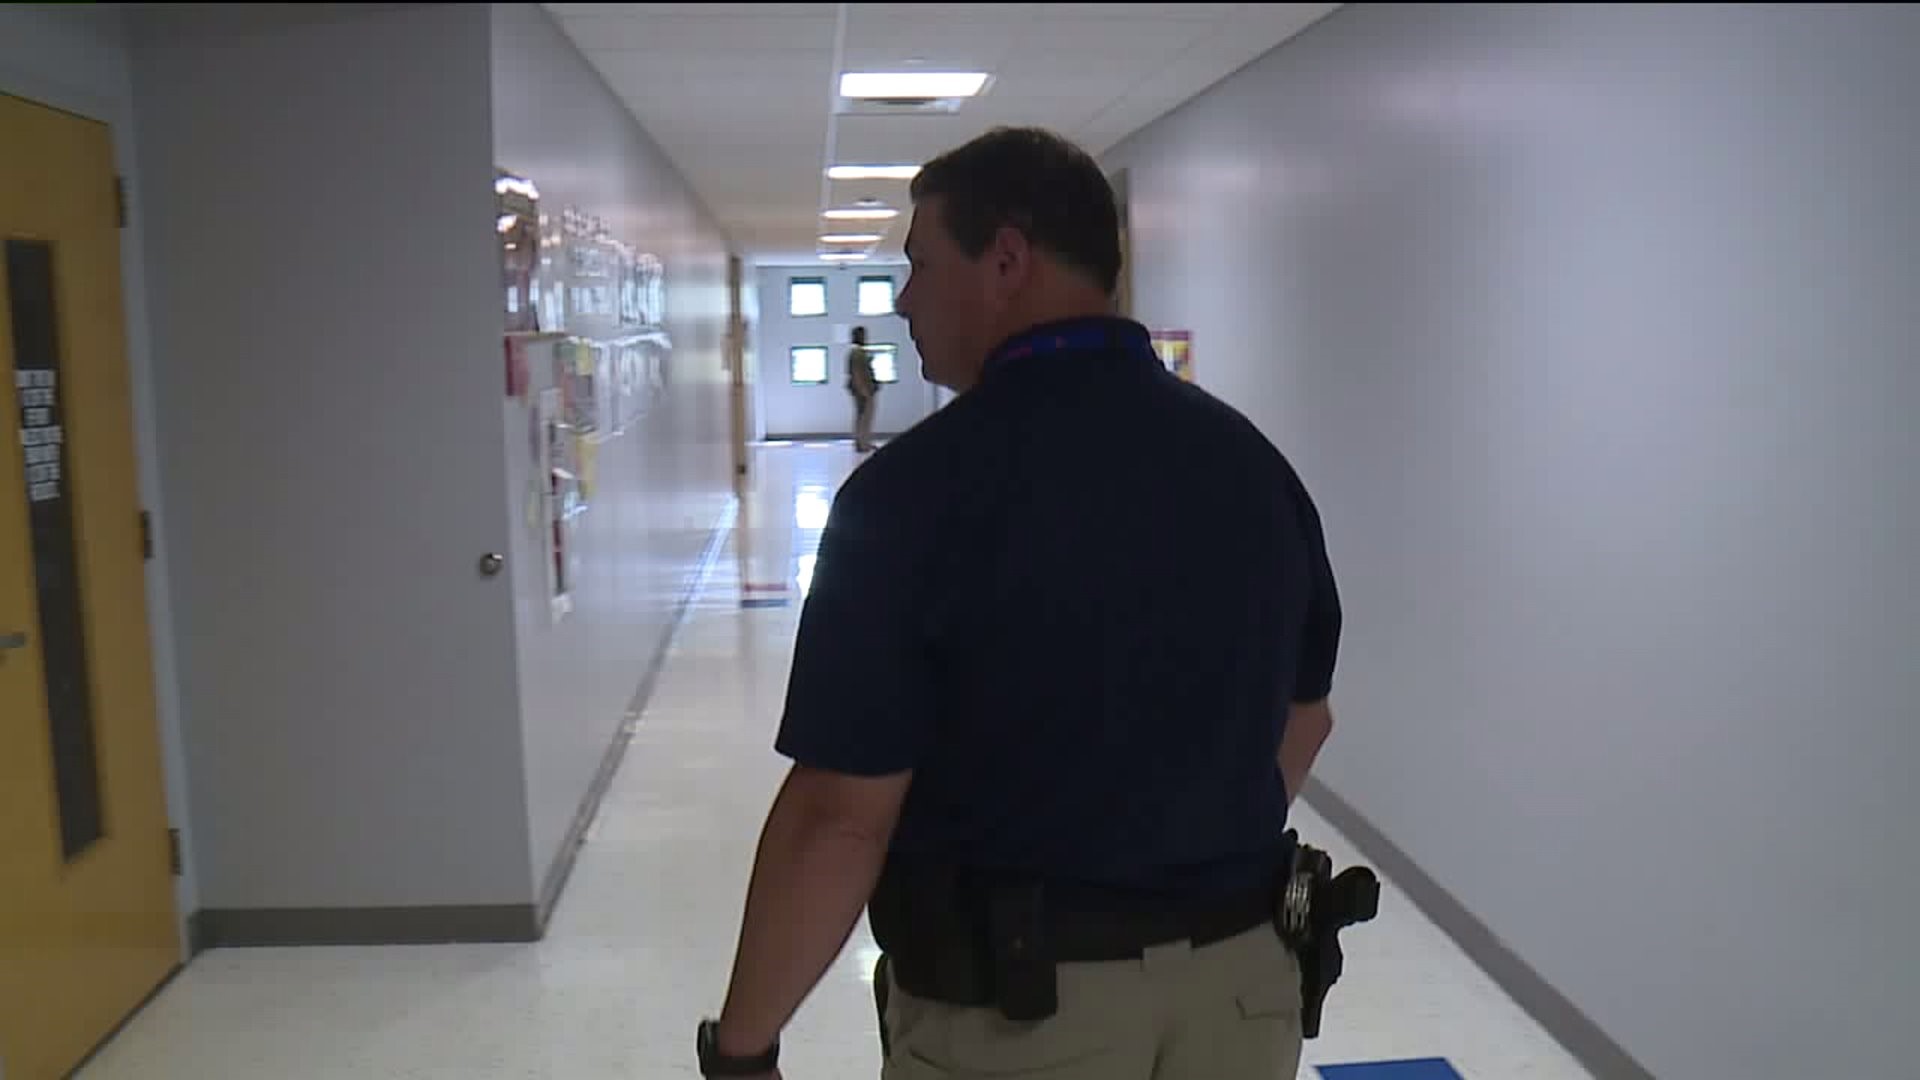 Carbondale Area Creates School Police Department